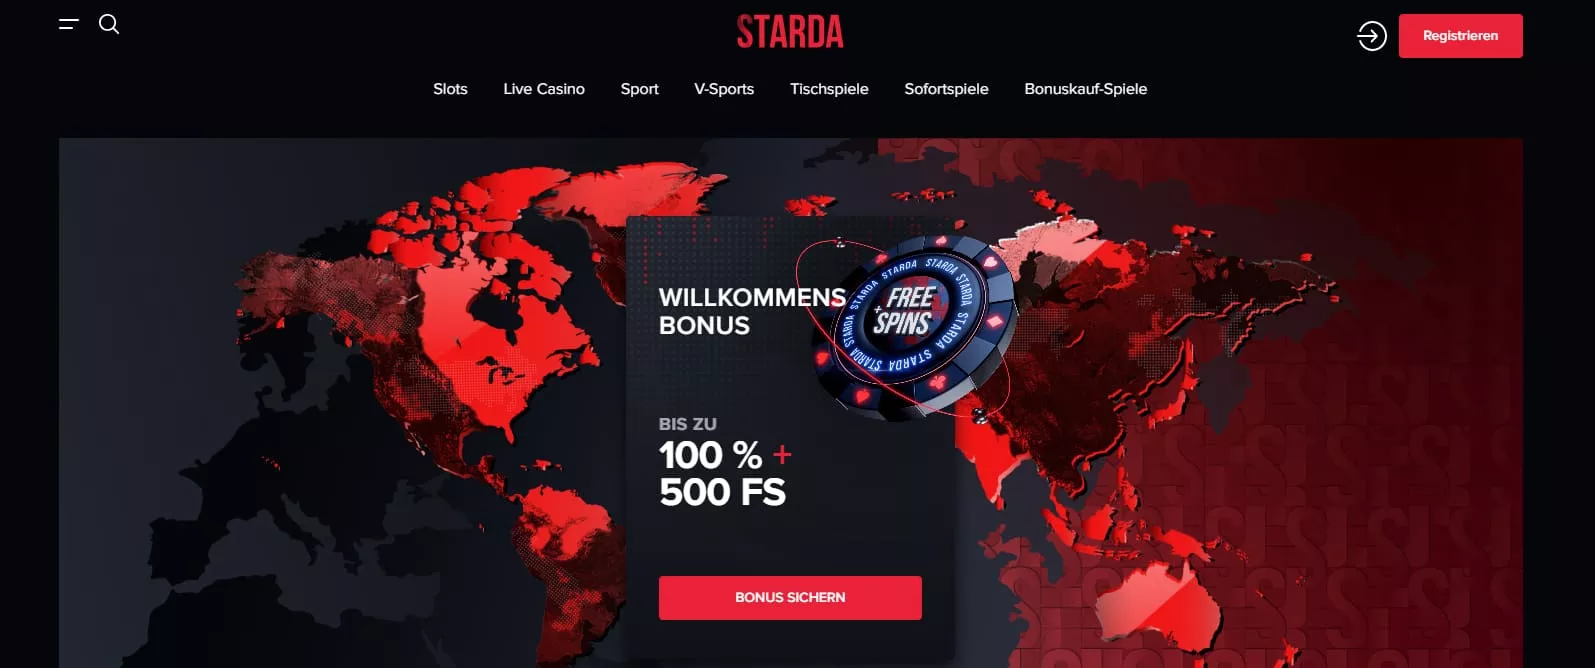 STARDA Casino Bonus